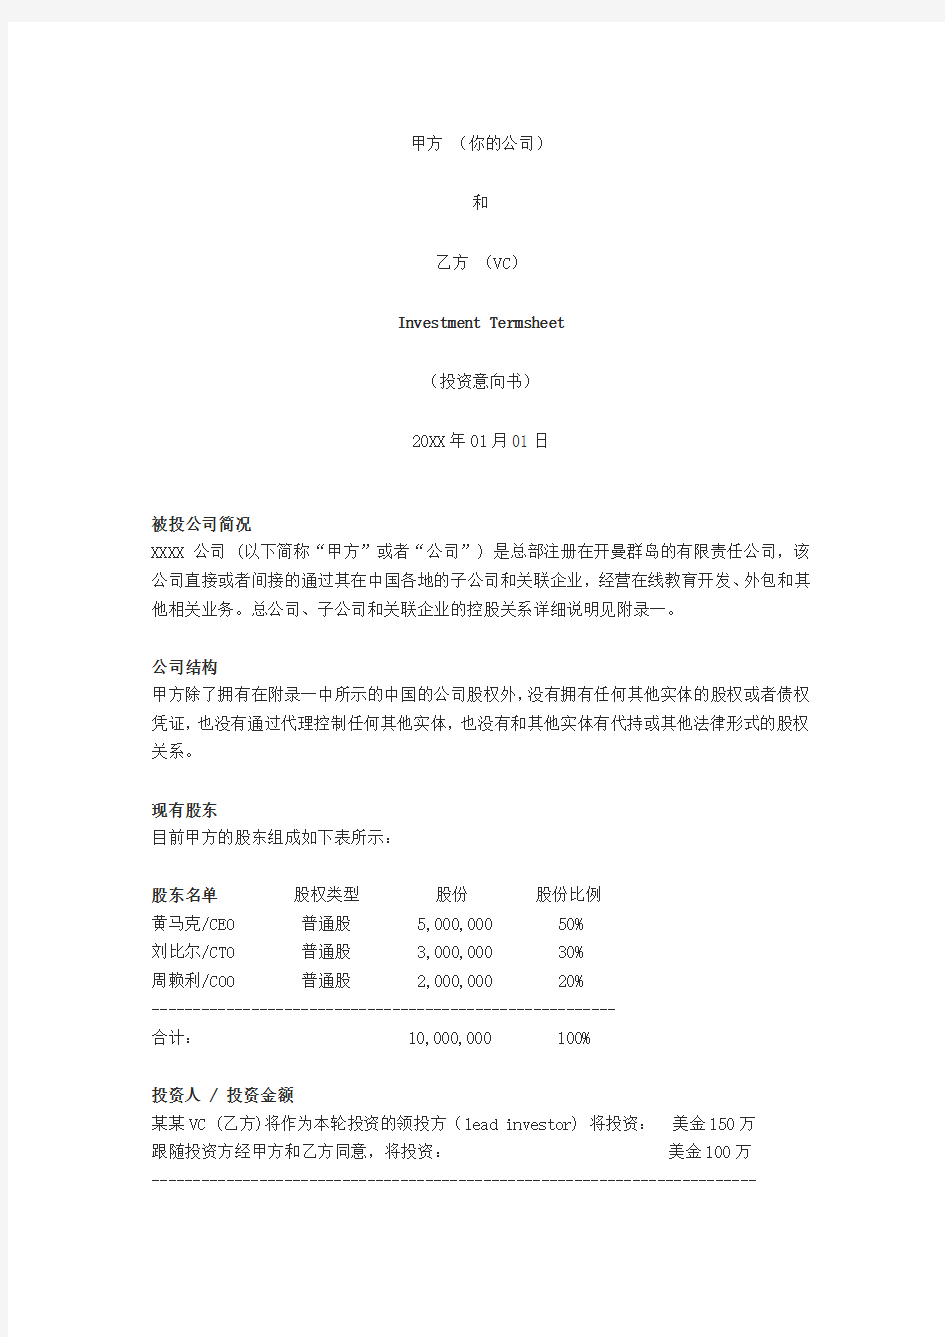 Investment Termsheet(查立)